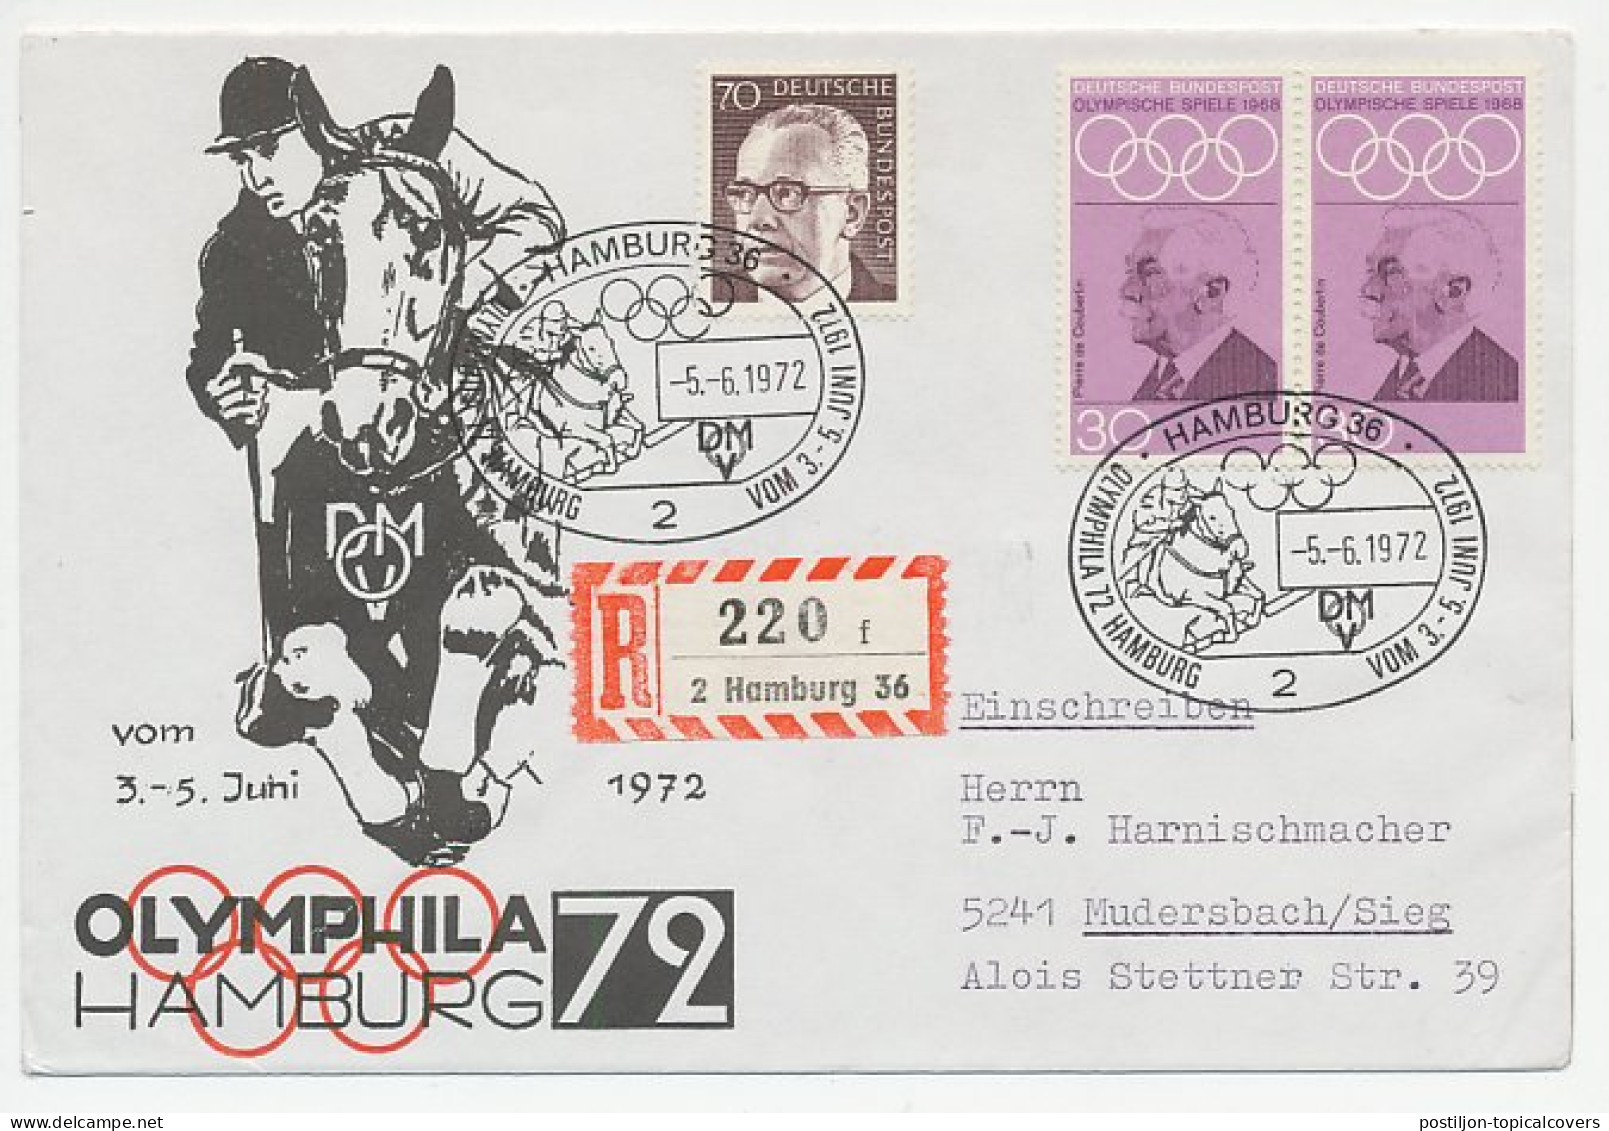 Registered Cover / Postmark Germany 1972 Horse Jumping - Olymphila Hamburg - Reitsport